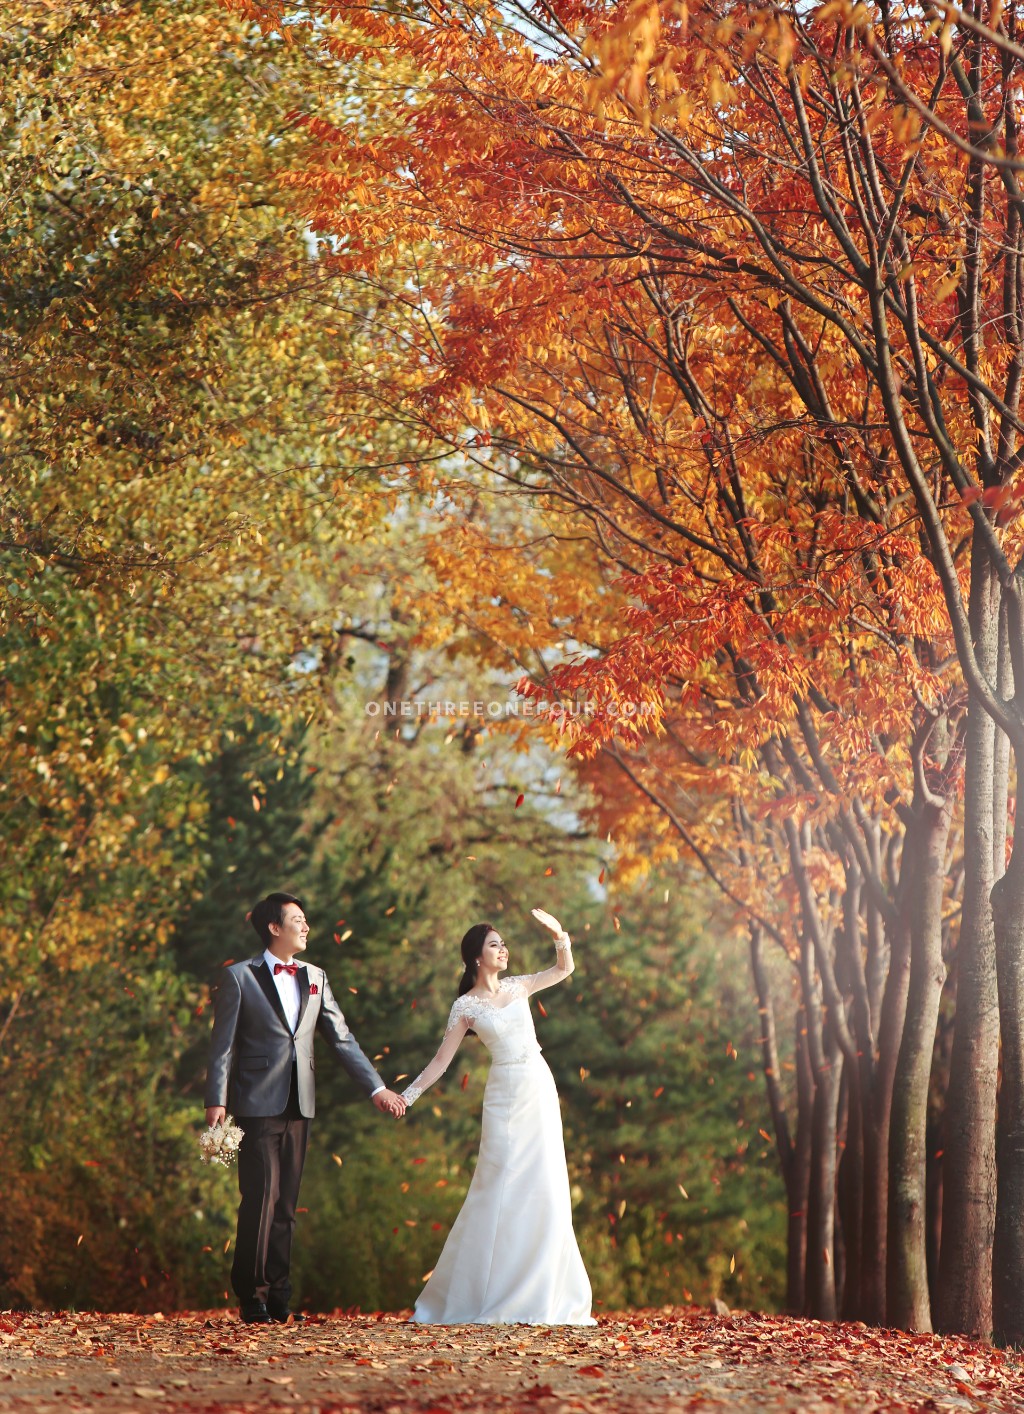 Studio Bong Korea Autumn Outdoor Pre-Wedding Photography - Past Clients by Bong Studio on OneThreeOneFour 9